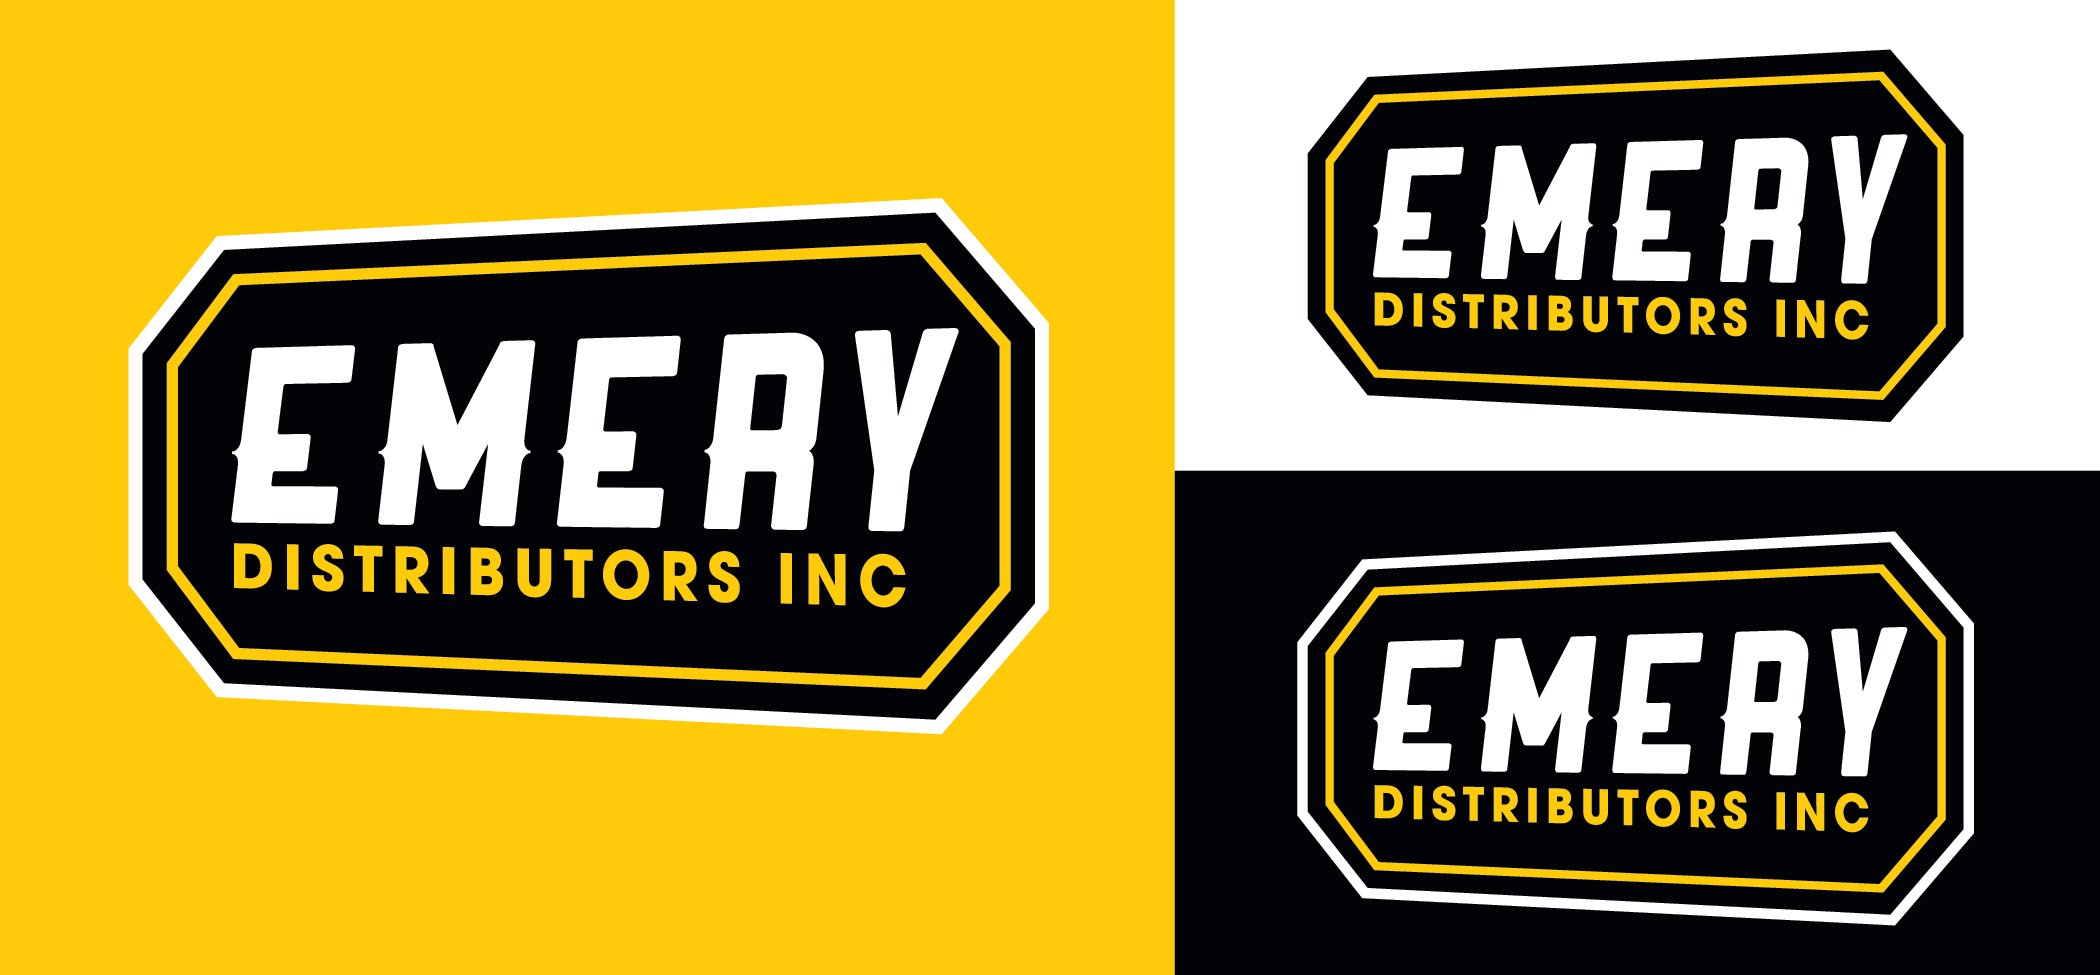 Emery Distributors Inc_SS-02.jpg